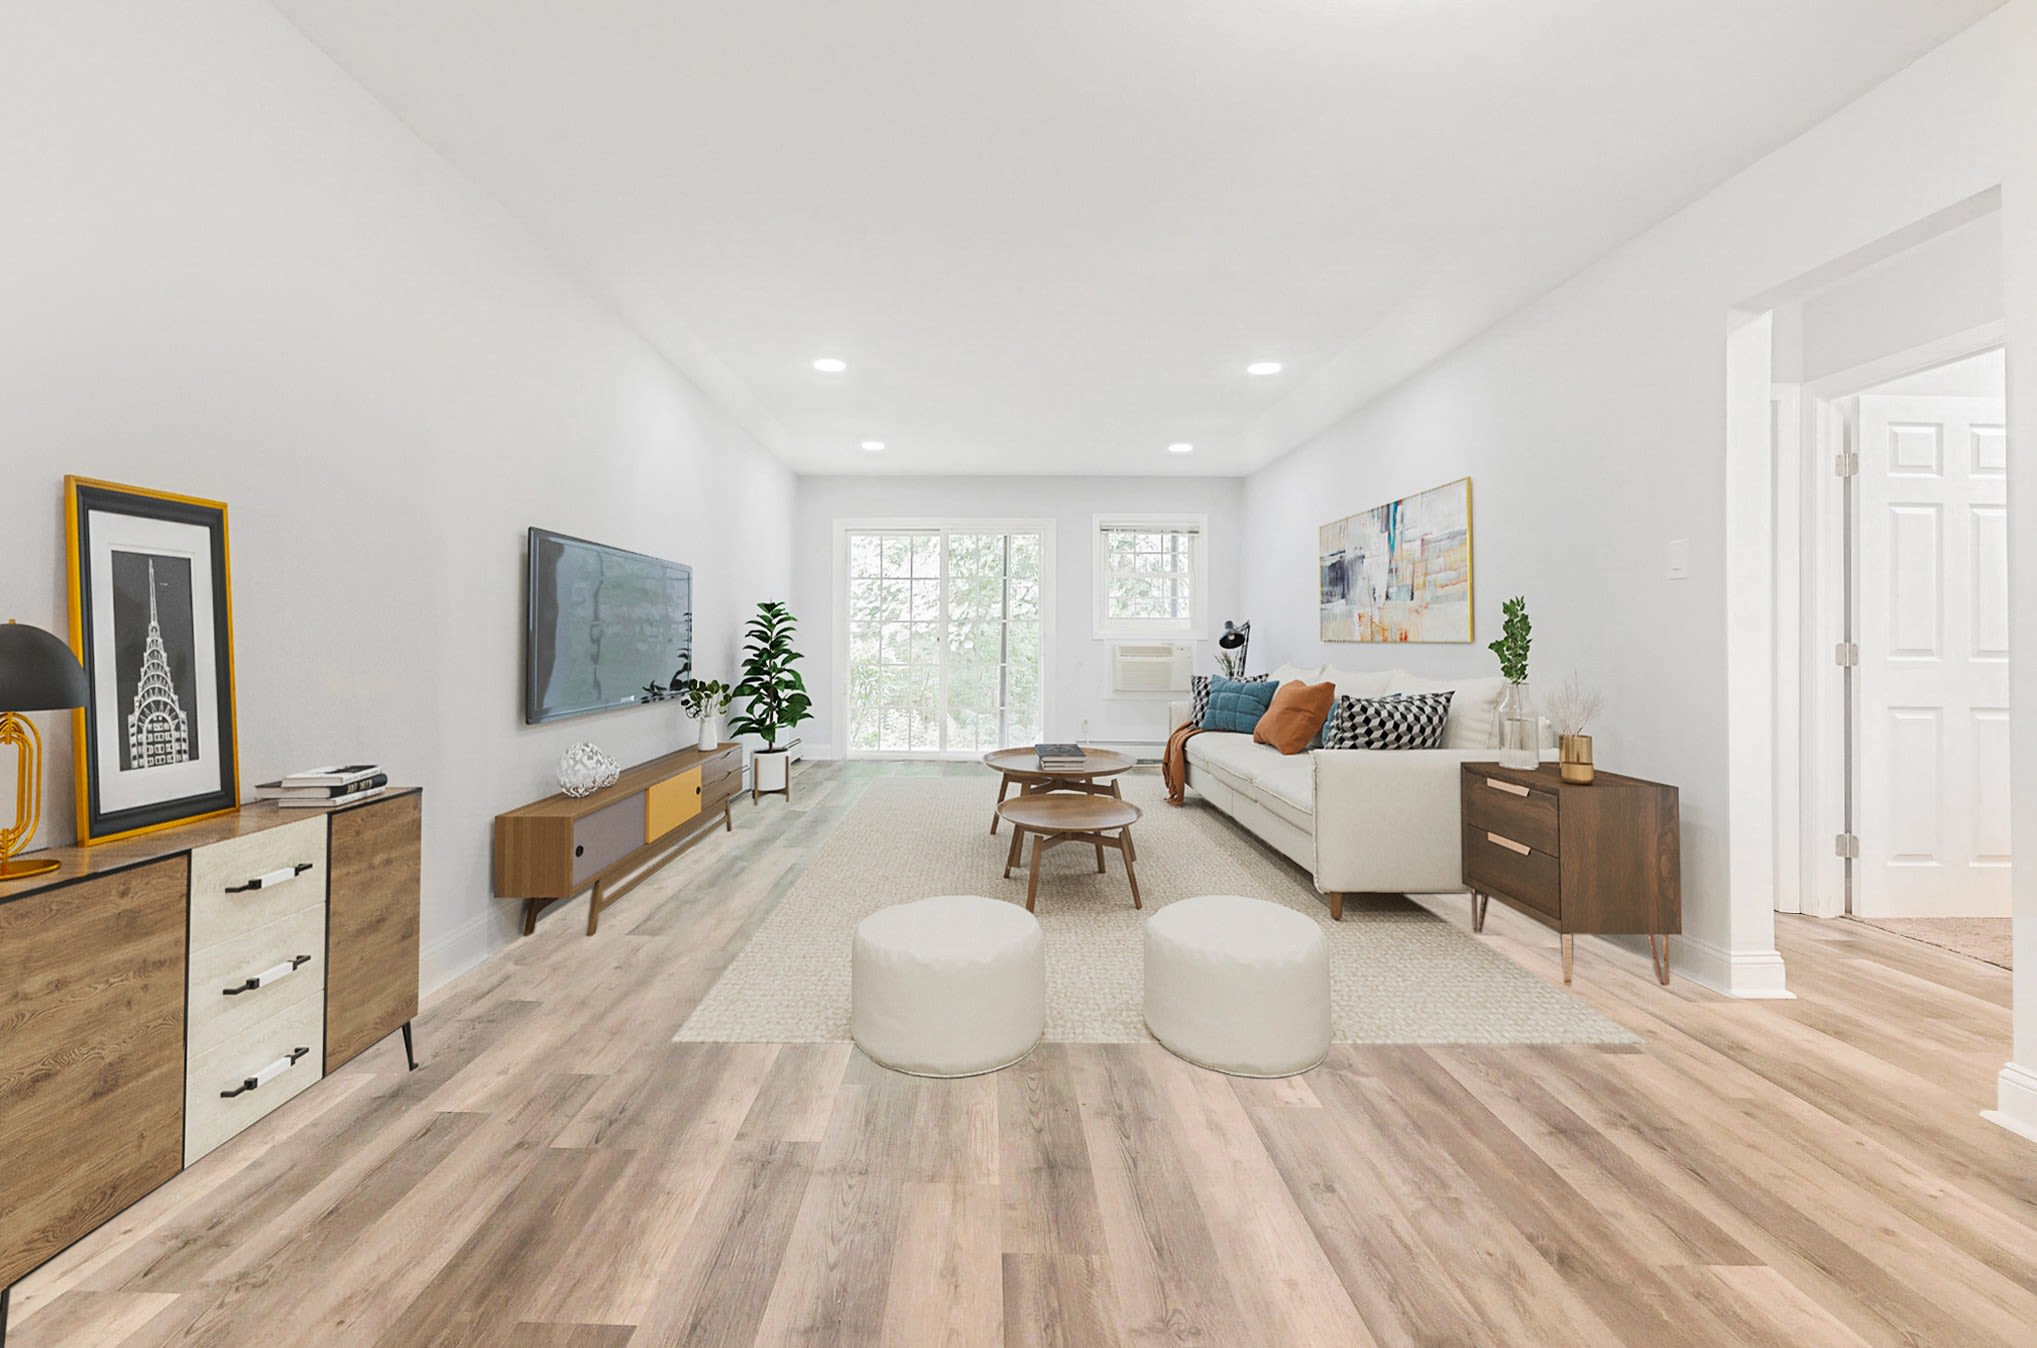 Hardwood floors throughout at Eagle Rock Apartments at Woodbury in Woodbury, New York